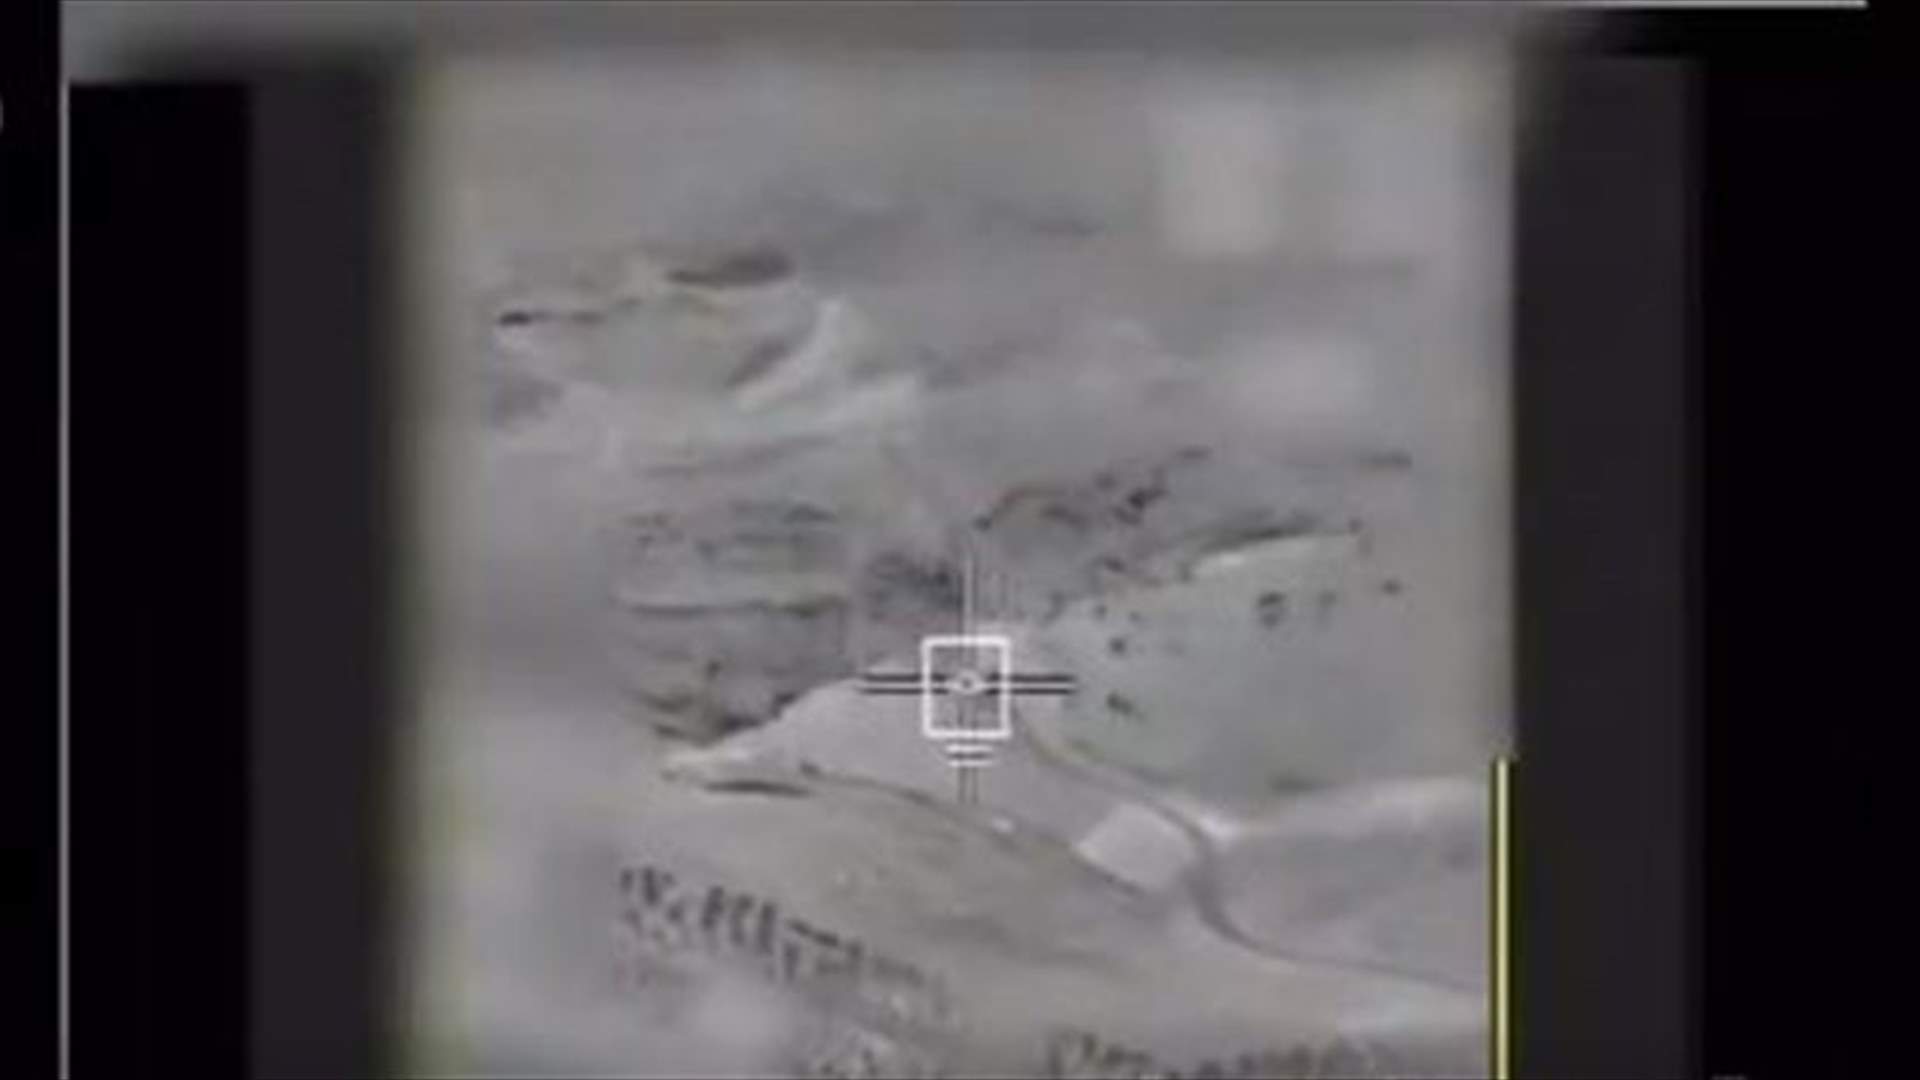 [VIDEO] Israeli military releases footage of aerial targeting in Syria